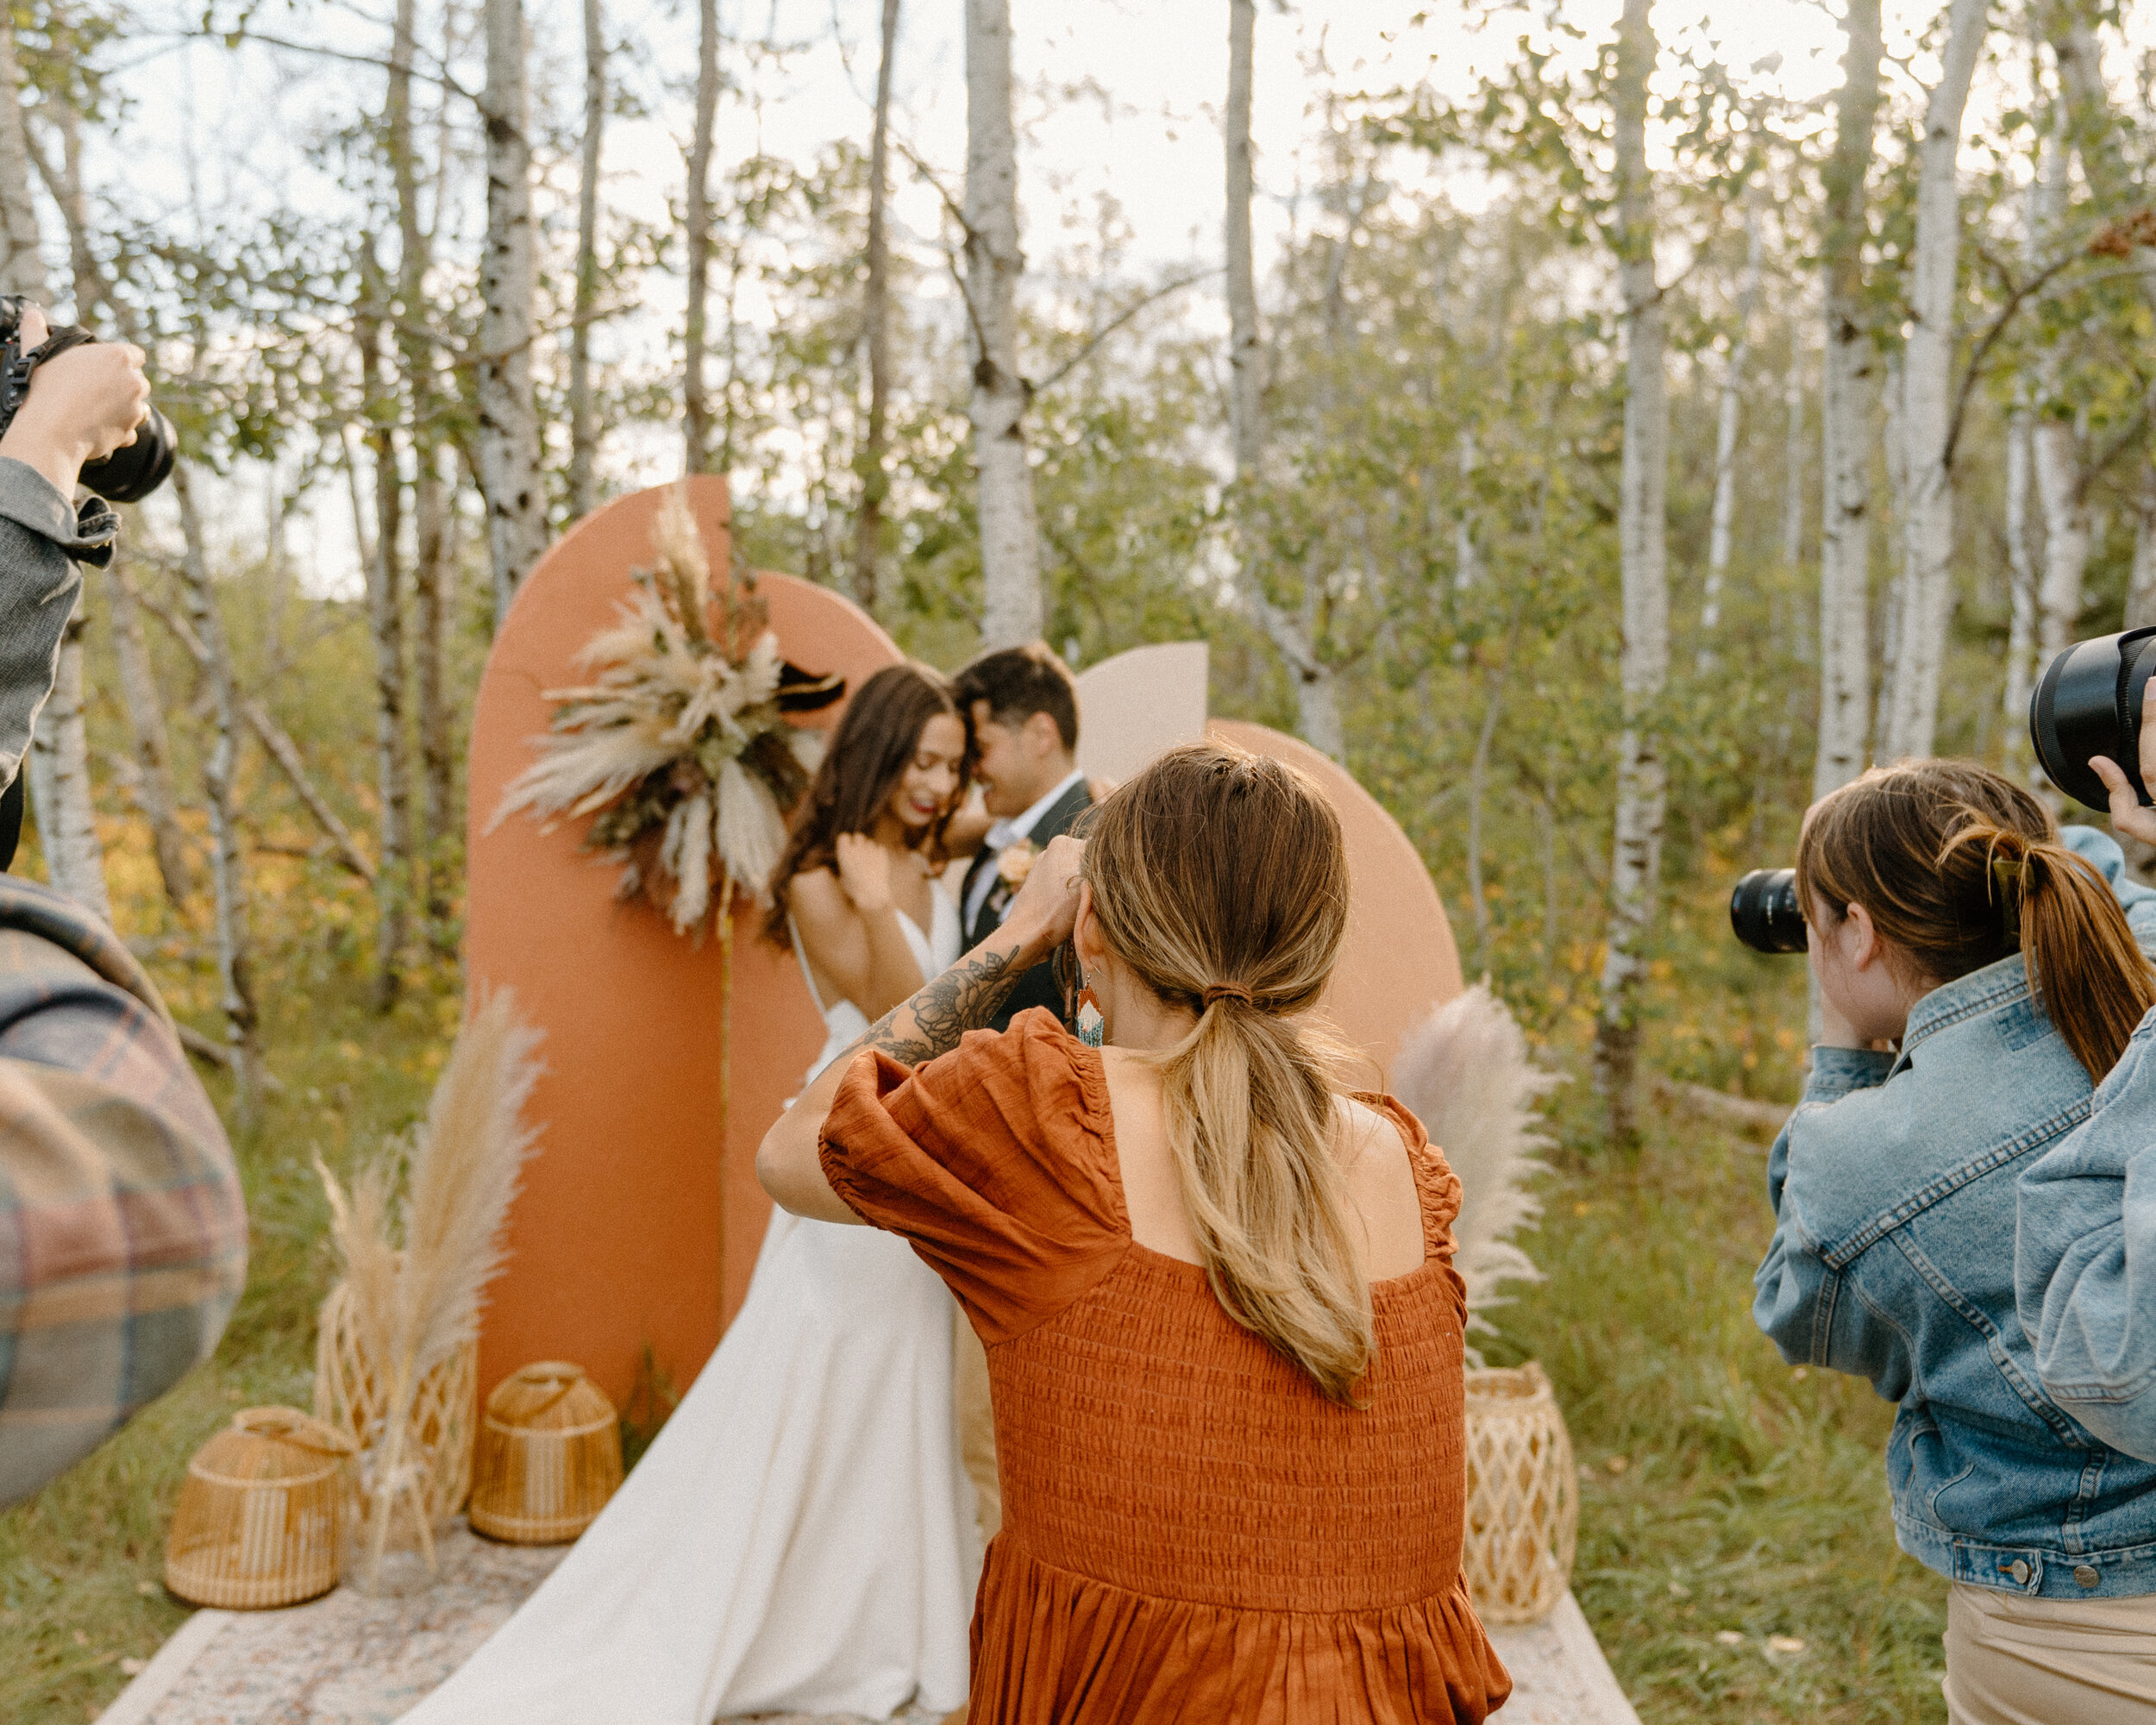 Stay-Close-2020-Wedding-Workshop-Brooke-Mos-Photography-03743.jpg